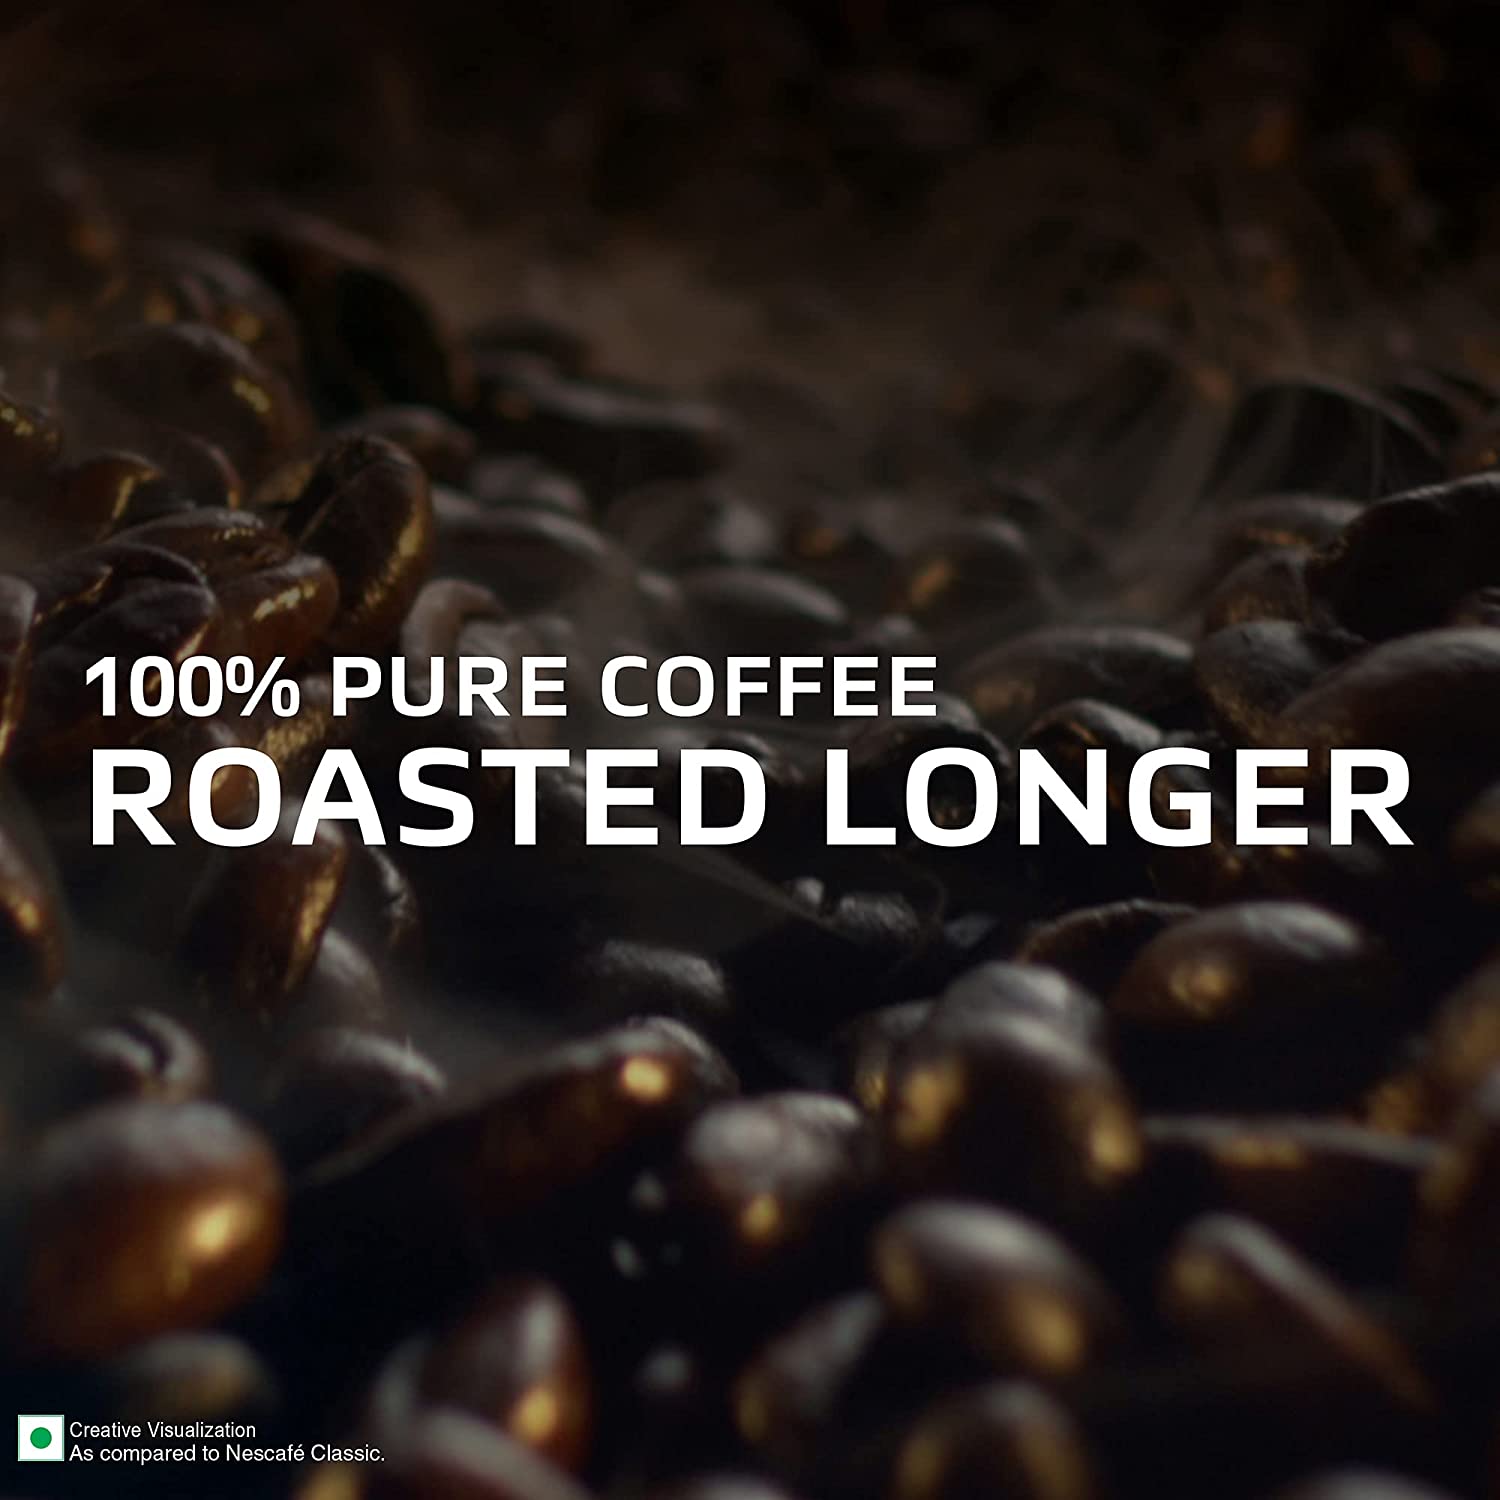 Nescafe Classic Black Roast Instant Coffee - Rich & Dark, 100% Pure, S –  Fetch N Buy